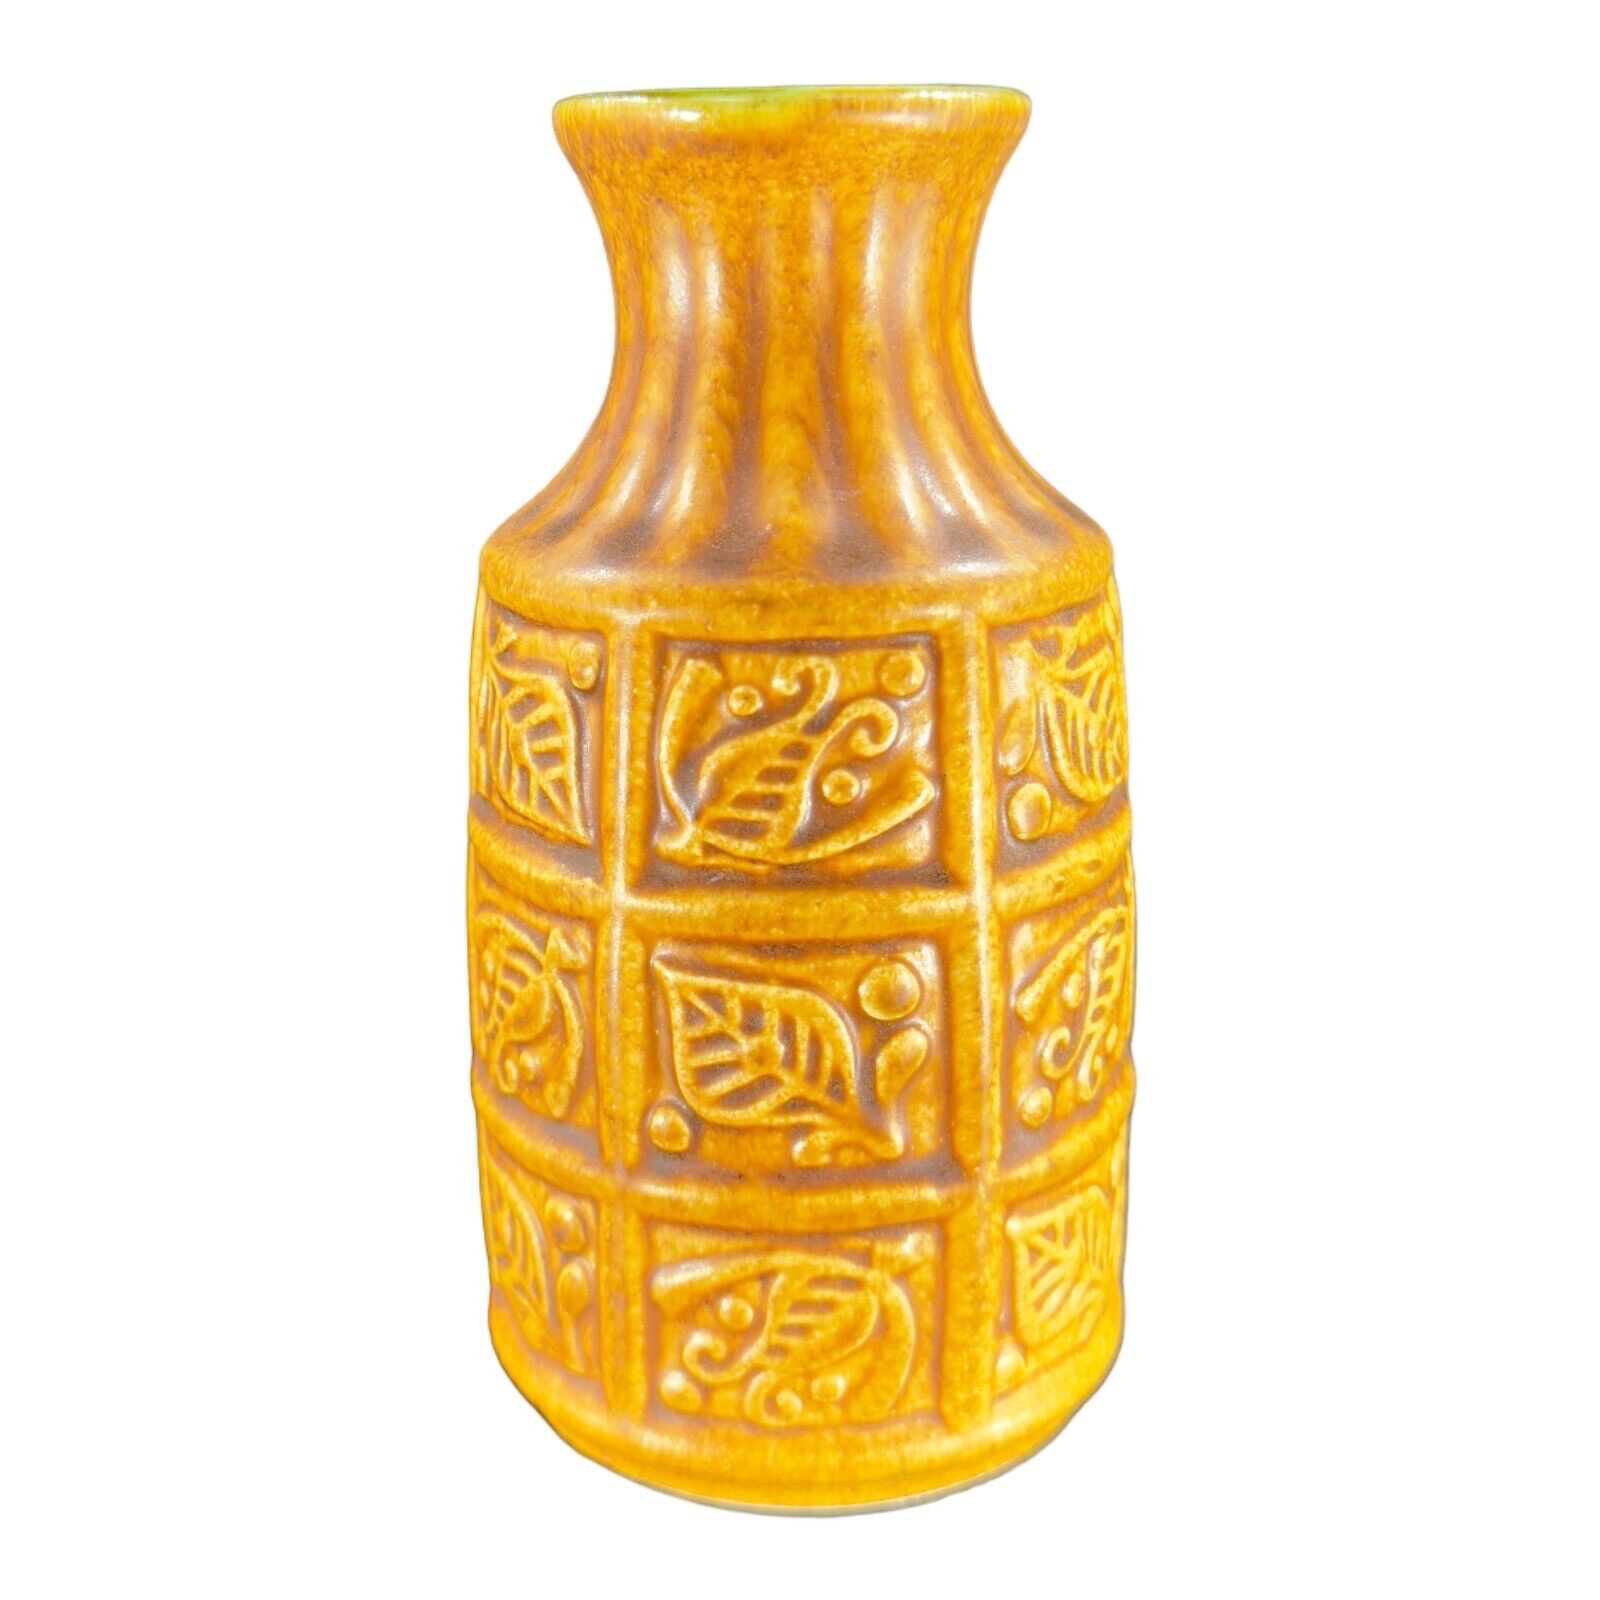 1970s Retro Bay Keramik Germany Brown Glazed Vase Vessel Vintage Pottery 74 14